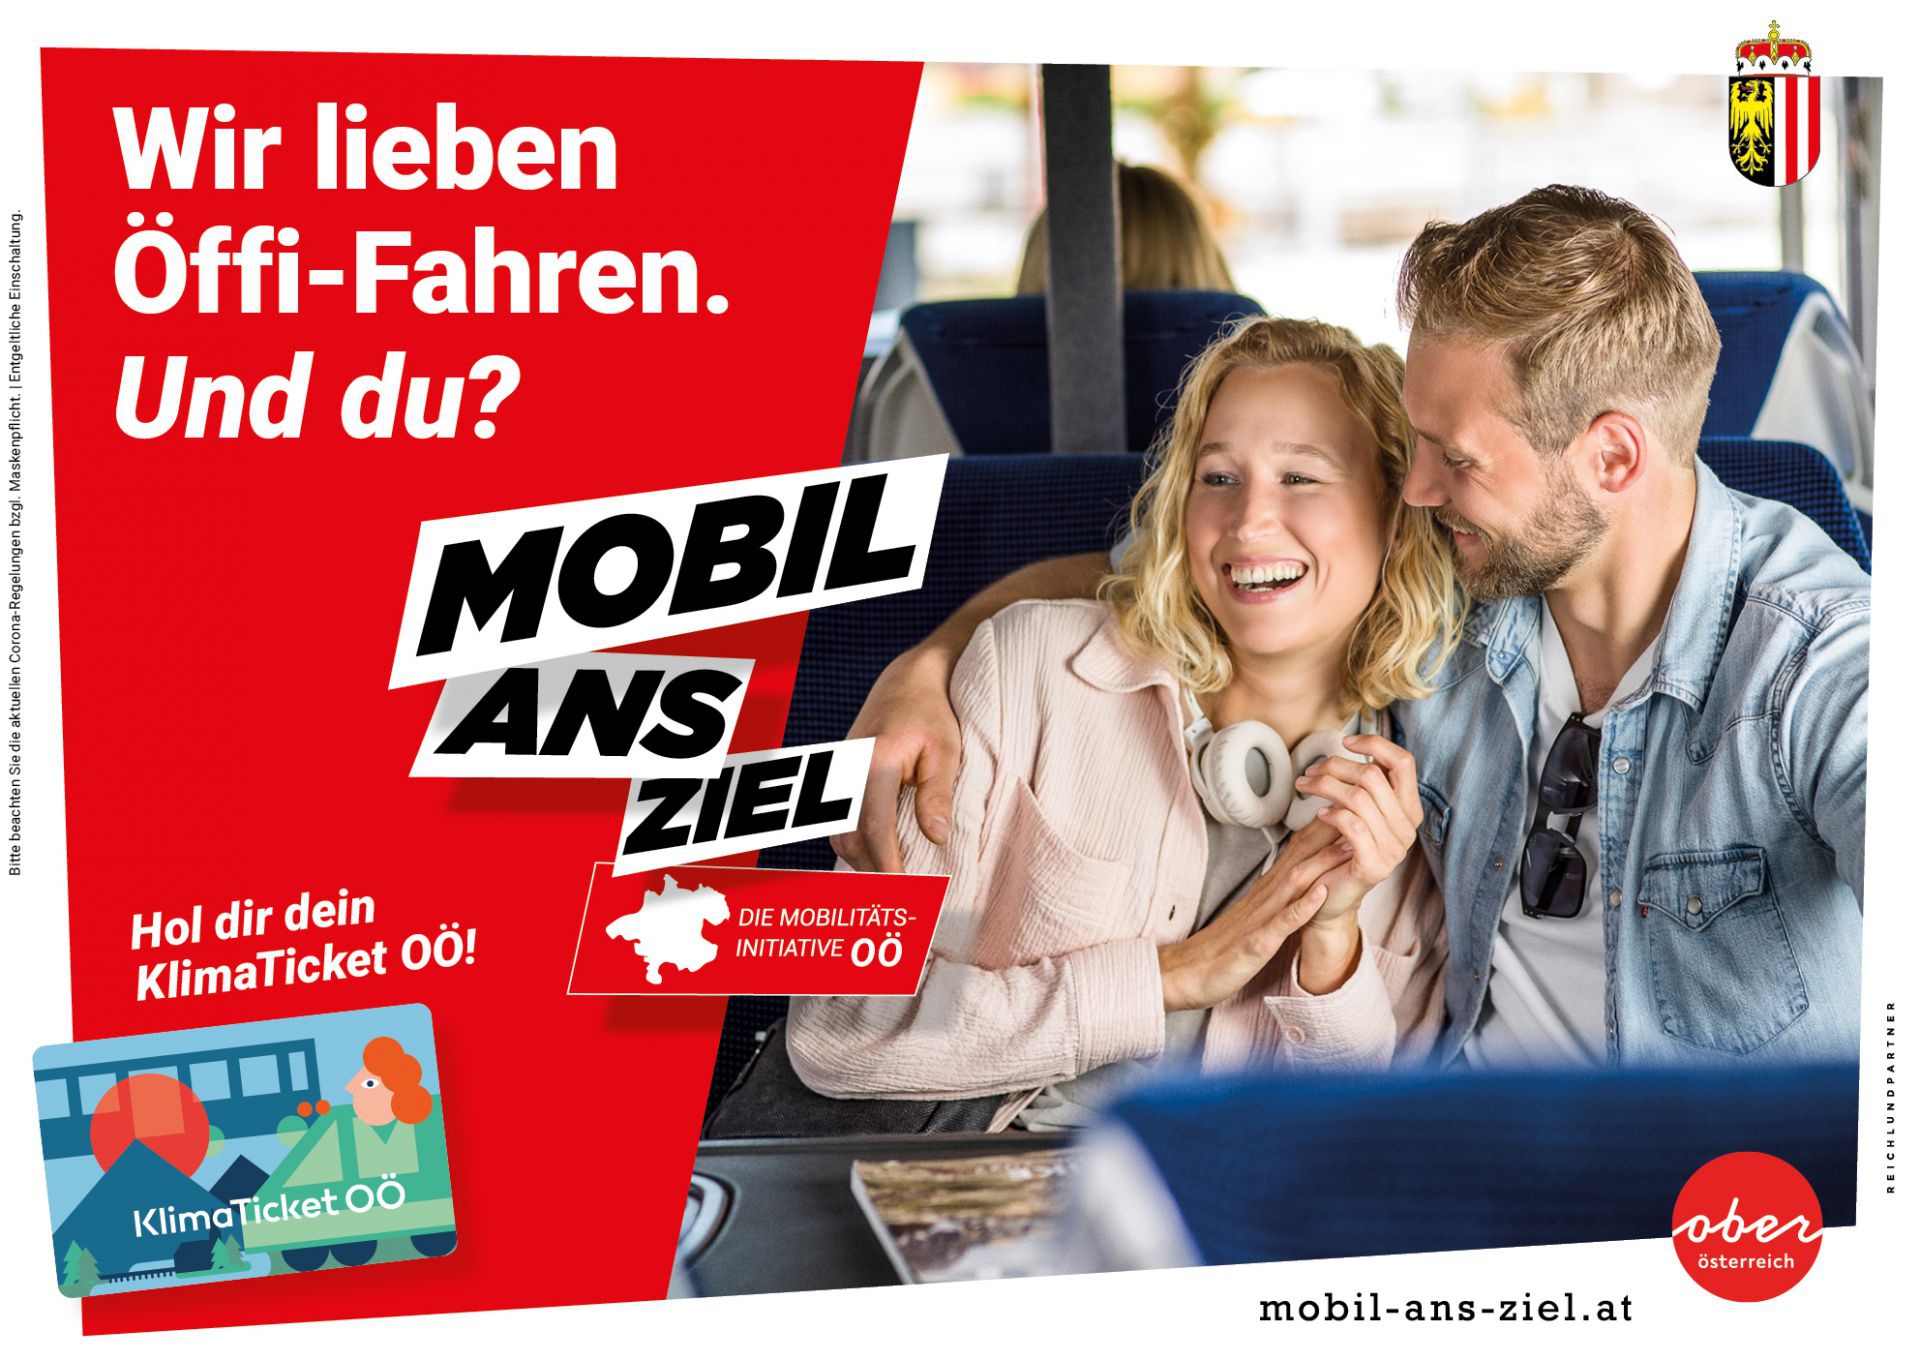 MOBIL ANS ZIEL - Die Mobilitätsinitiative des Landes OÖ